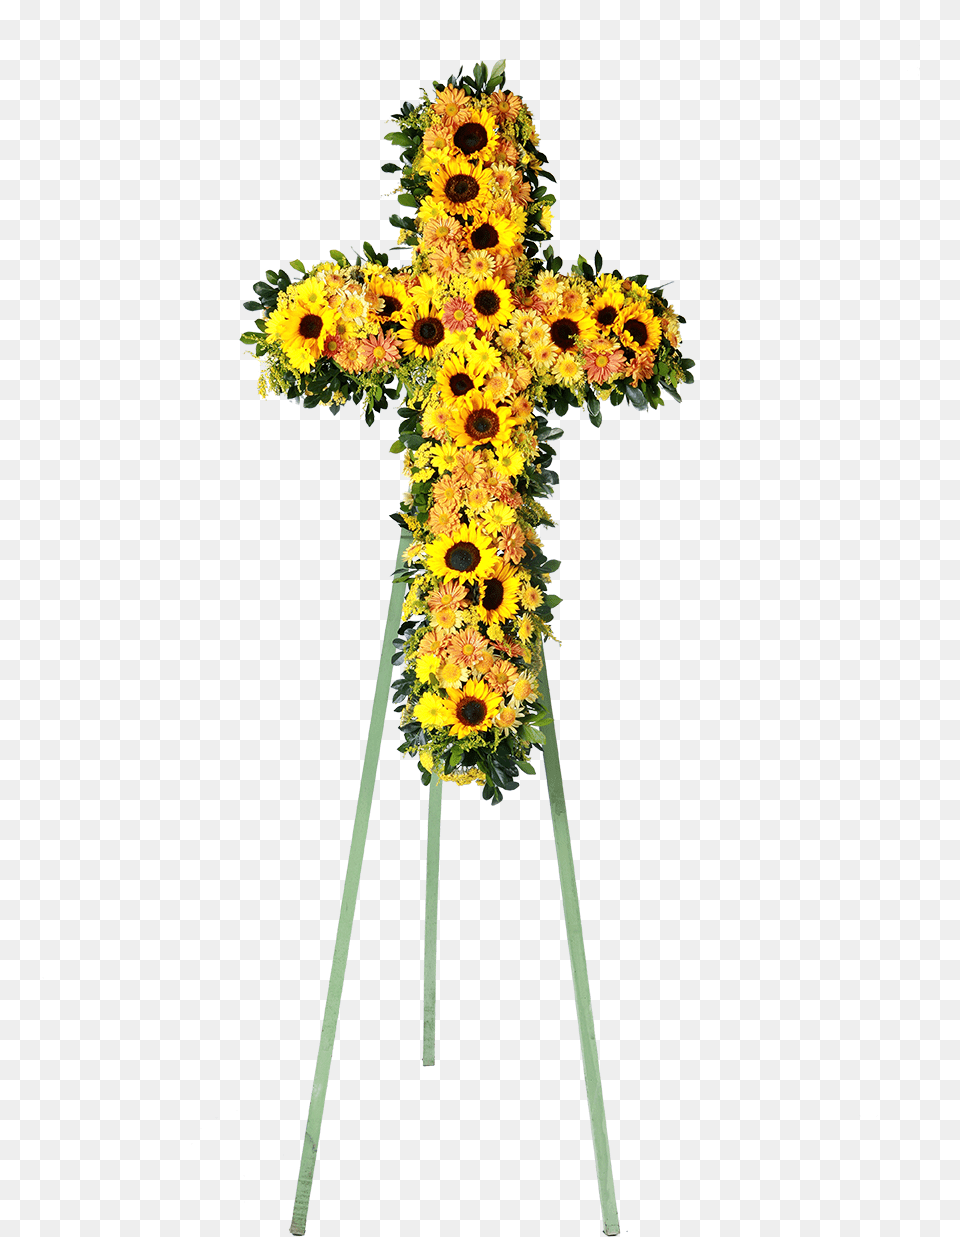 Cross, Flower, Plant, Symbol, Flower Arrangement Png Image